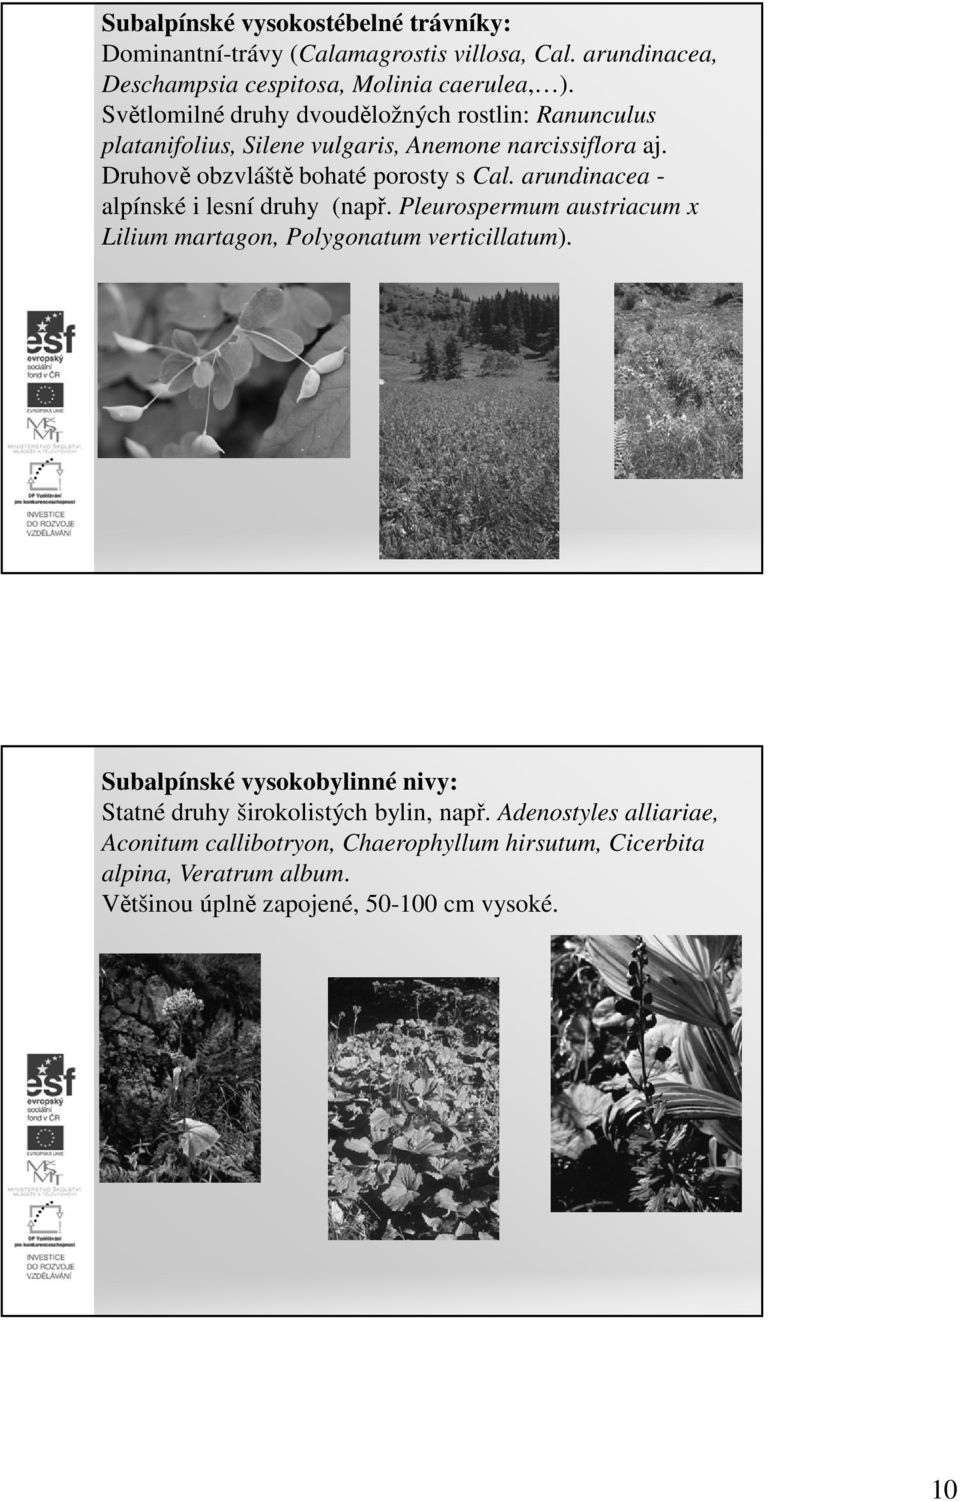 arundinacea - alpínské i lesní druhy (např. Pleurospermum austriacum x Lilium martagon, Polygonatum verticillatum).